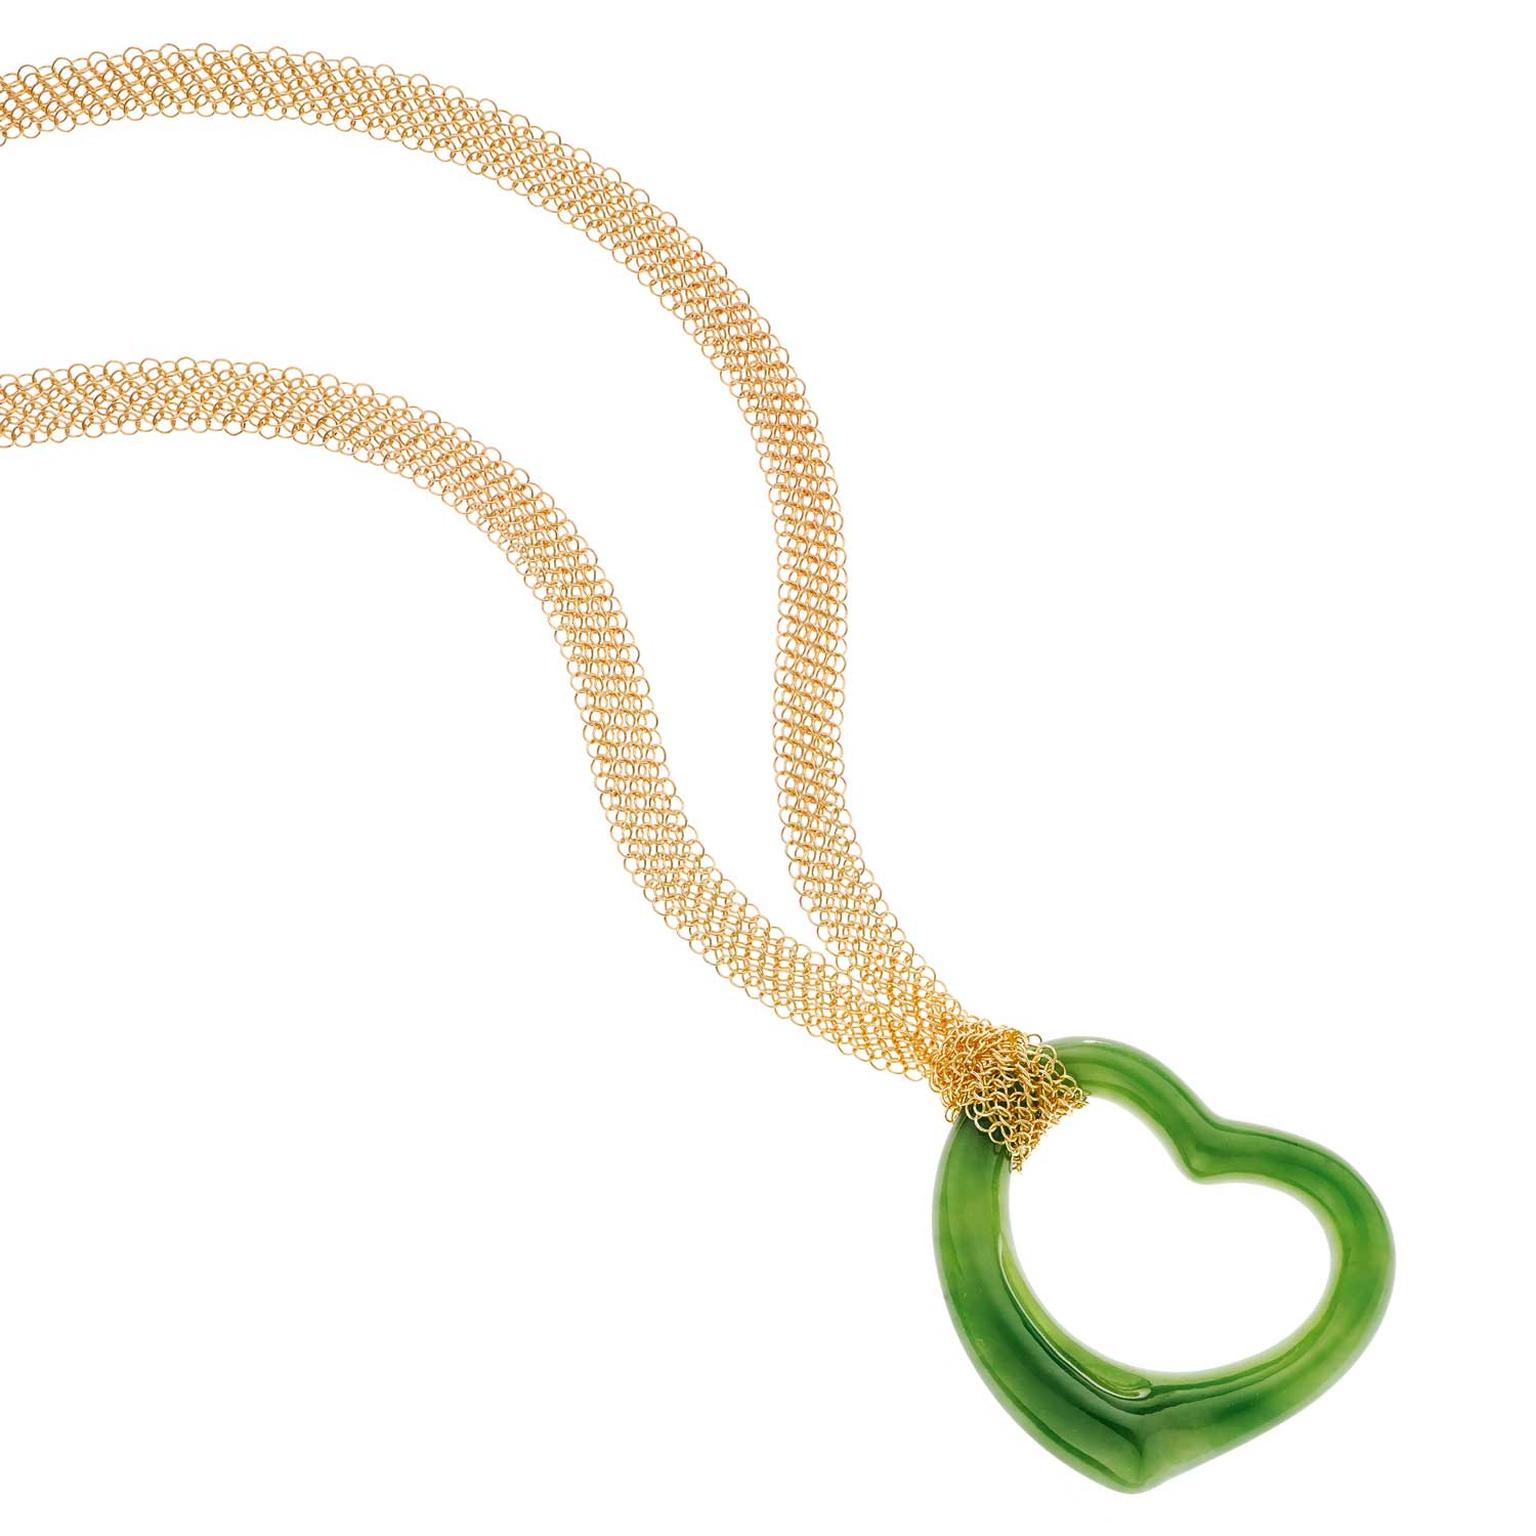 Elsa Peretti for Tiffany Open Heart green jade pendant on a gold mesh chain